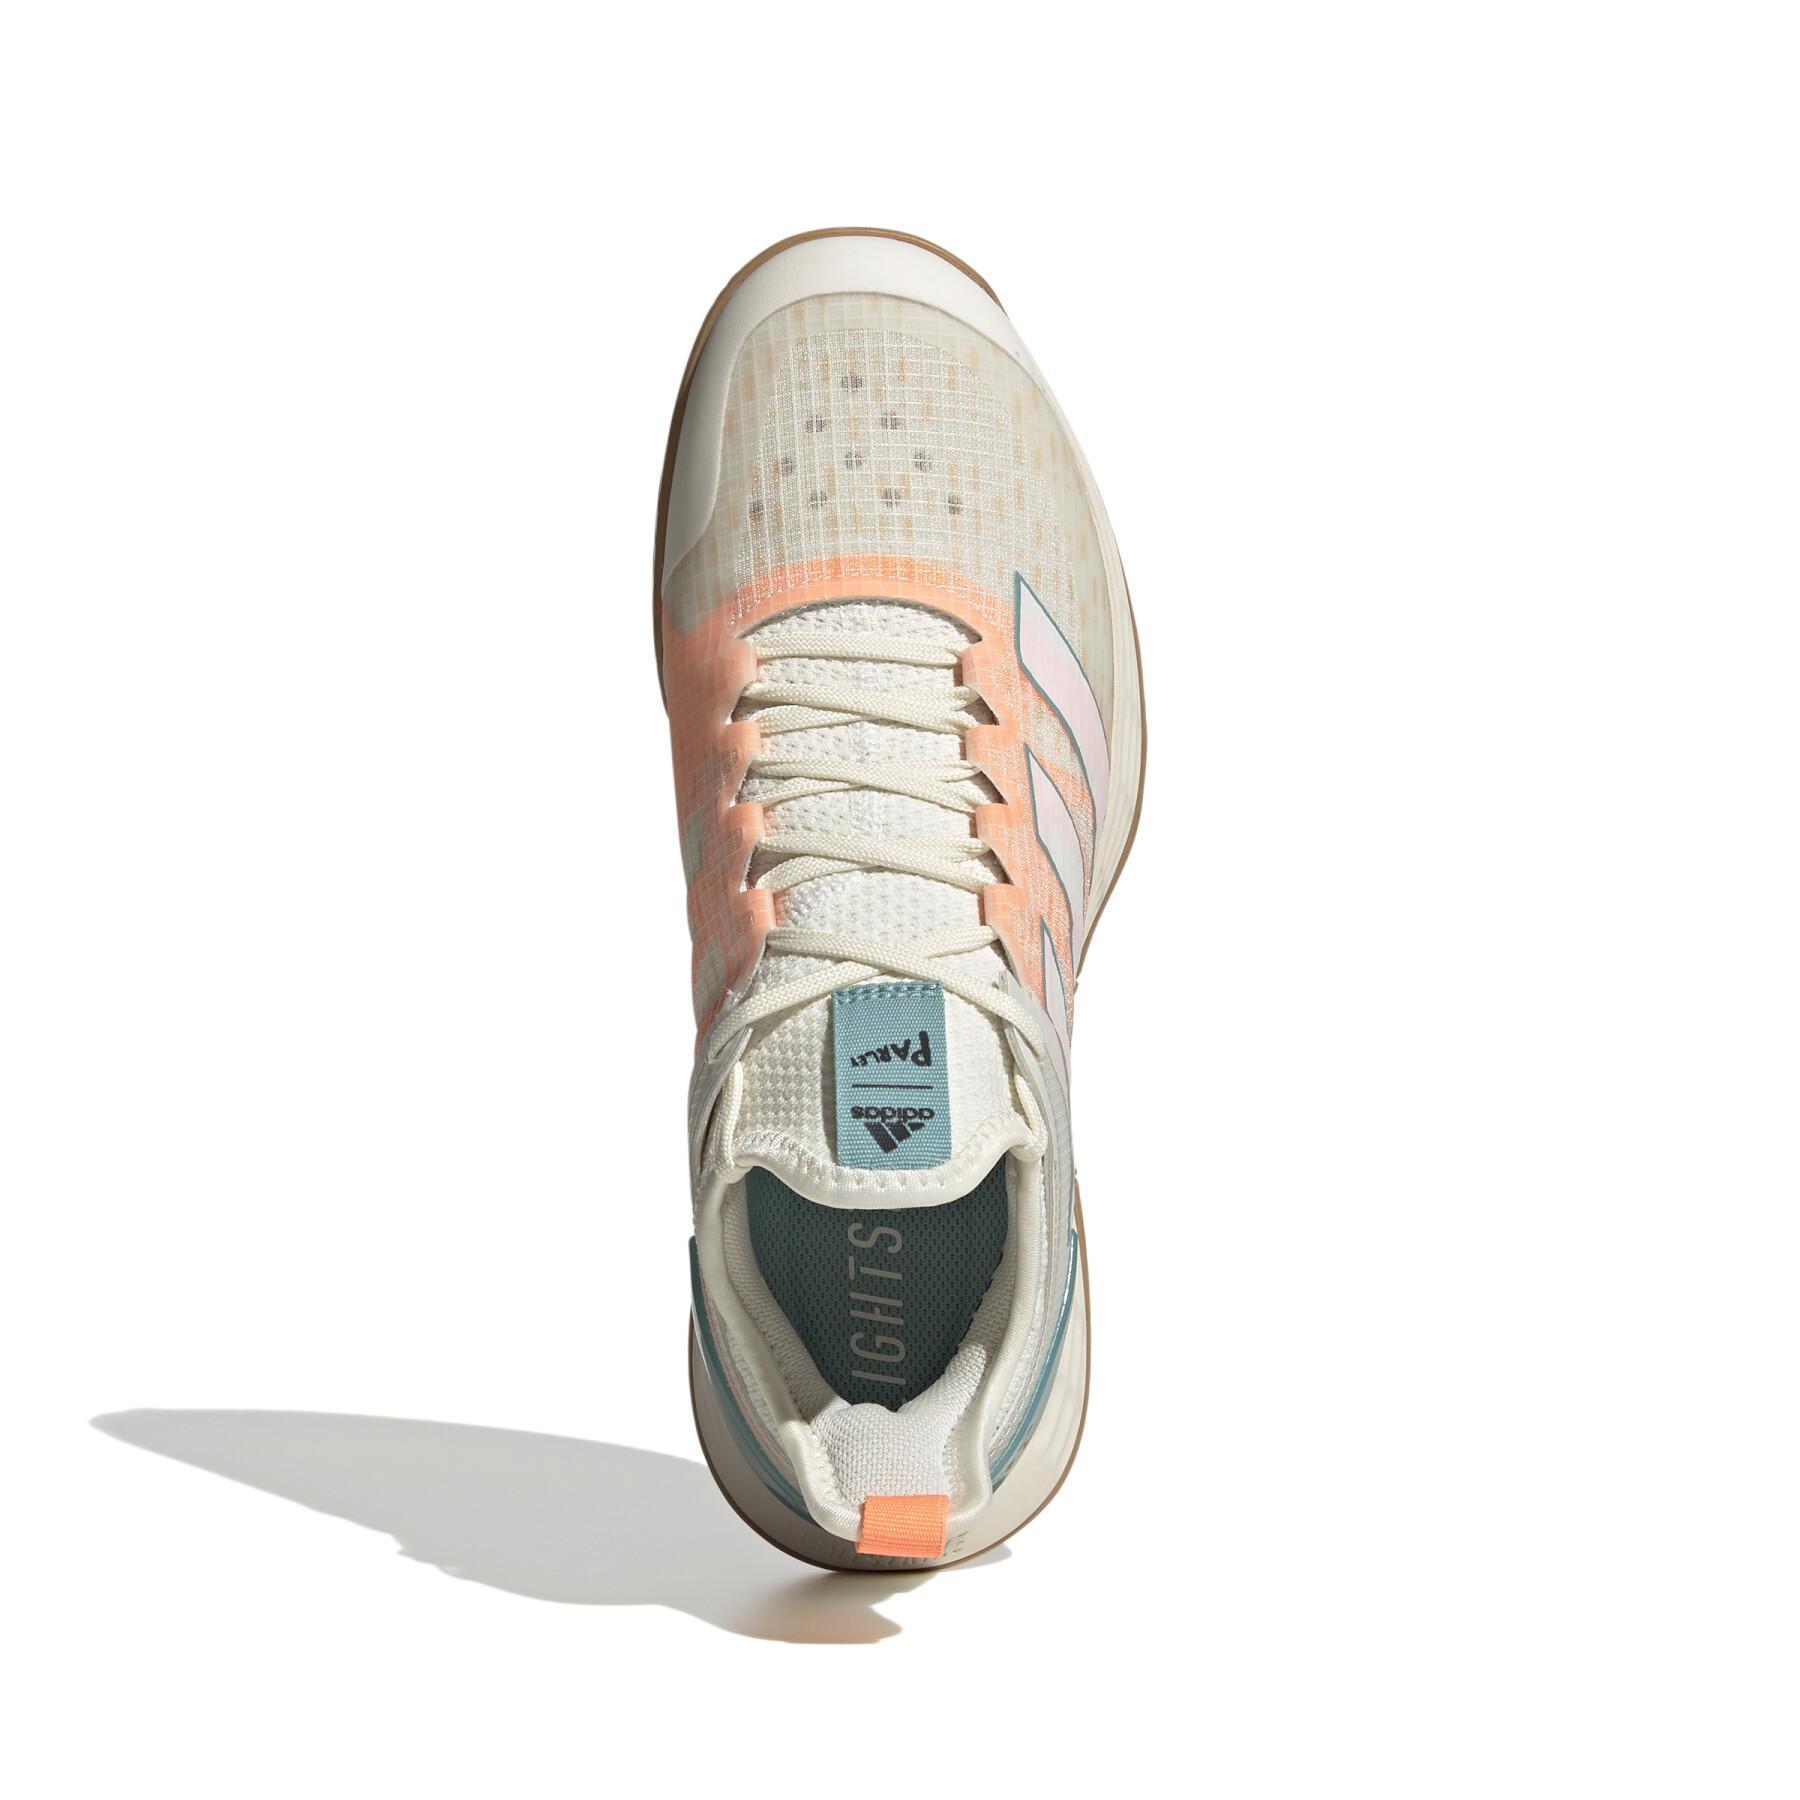 Women's tennis shoes adidas 150 Adizero Ubersonic 4 Parley